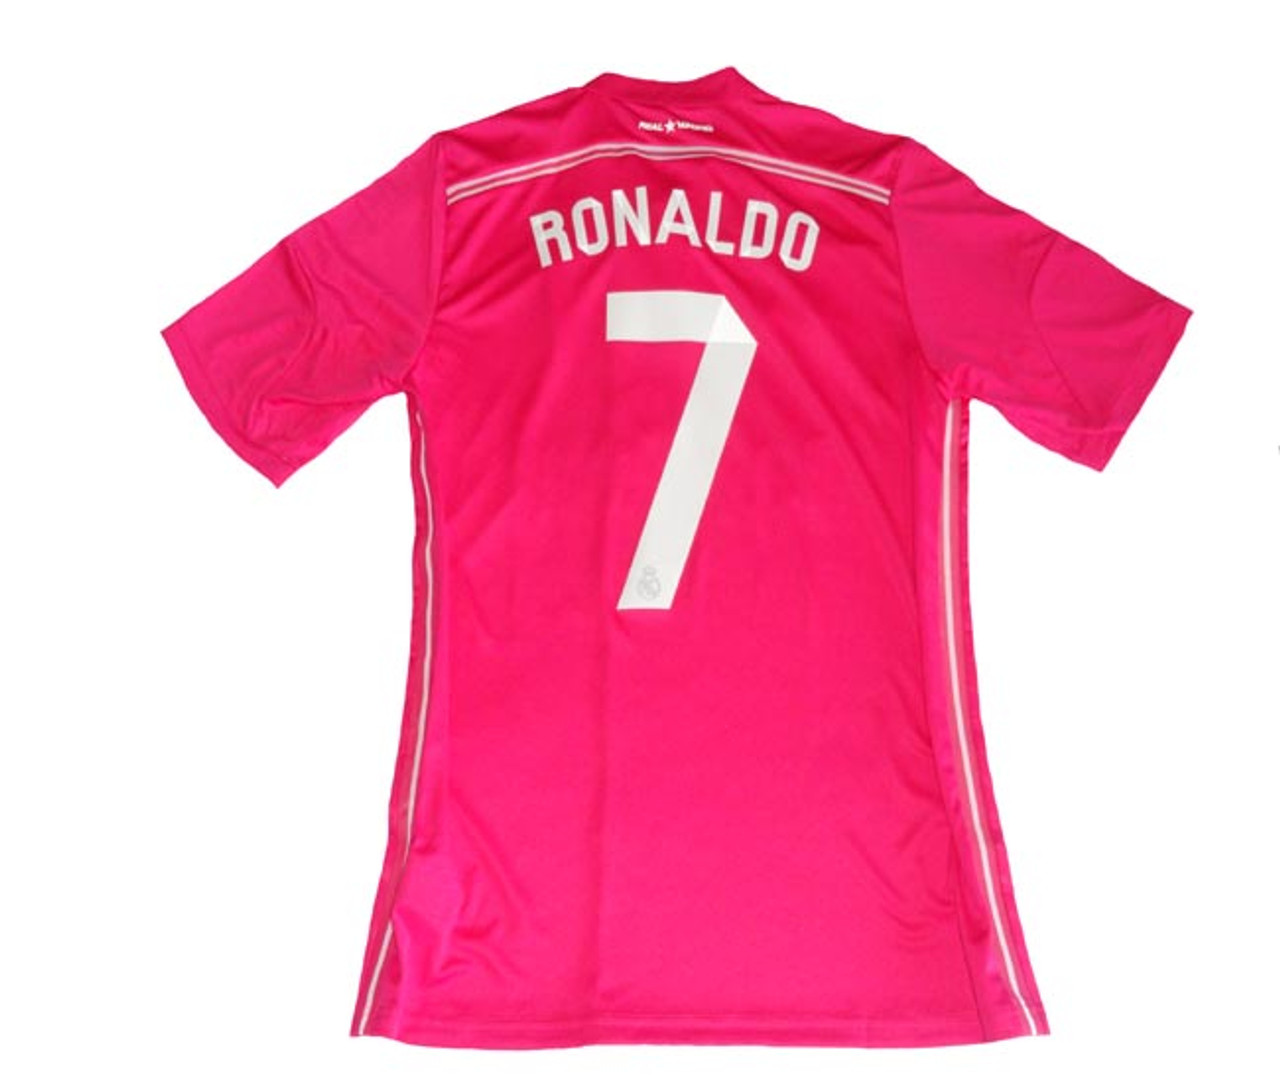 ronaldo in real madrid jersey